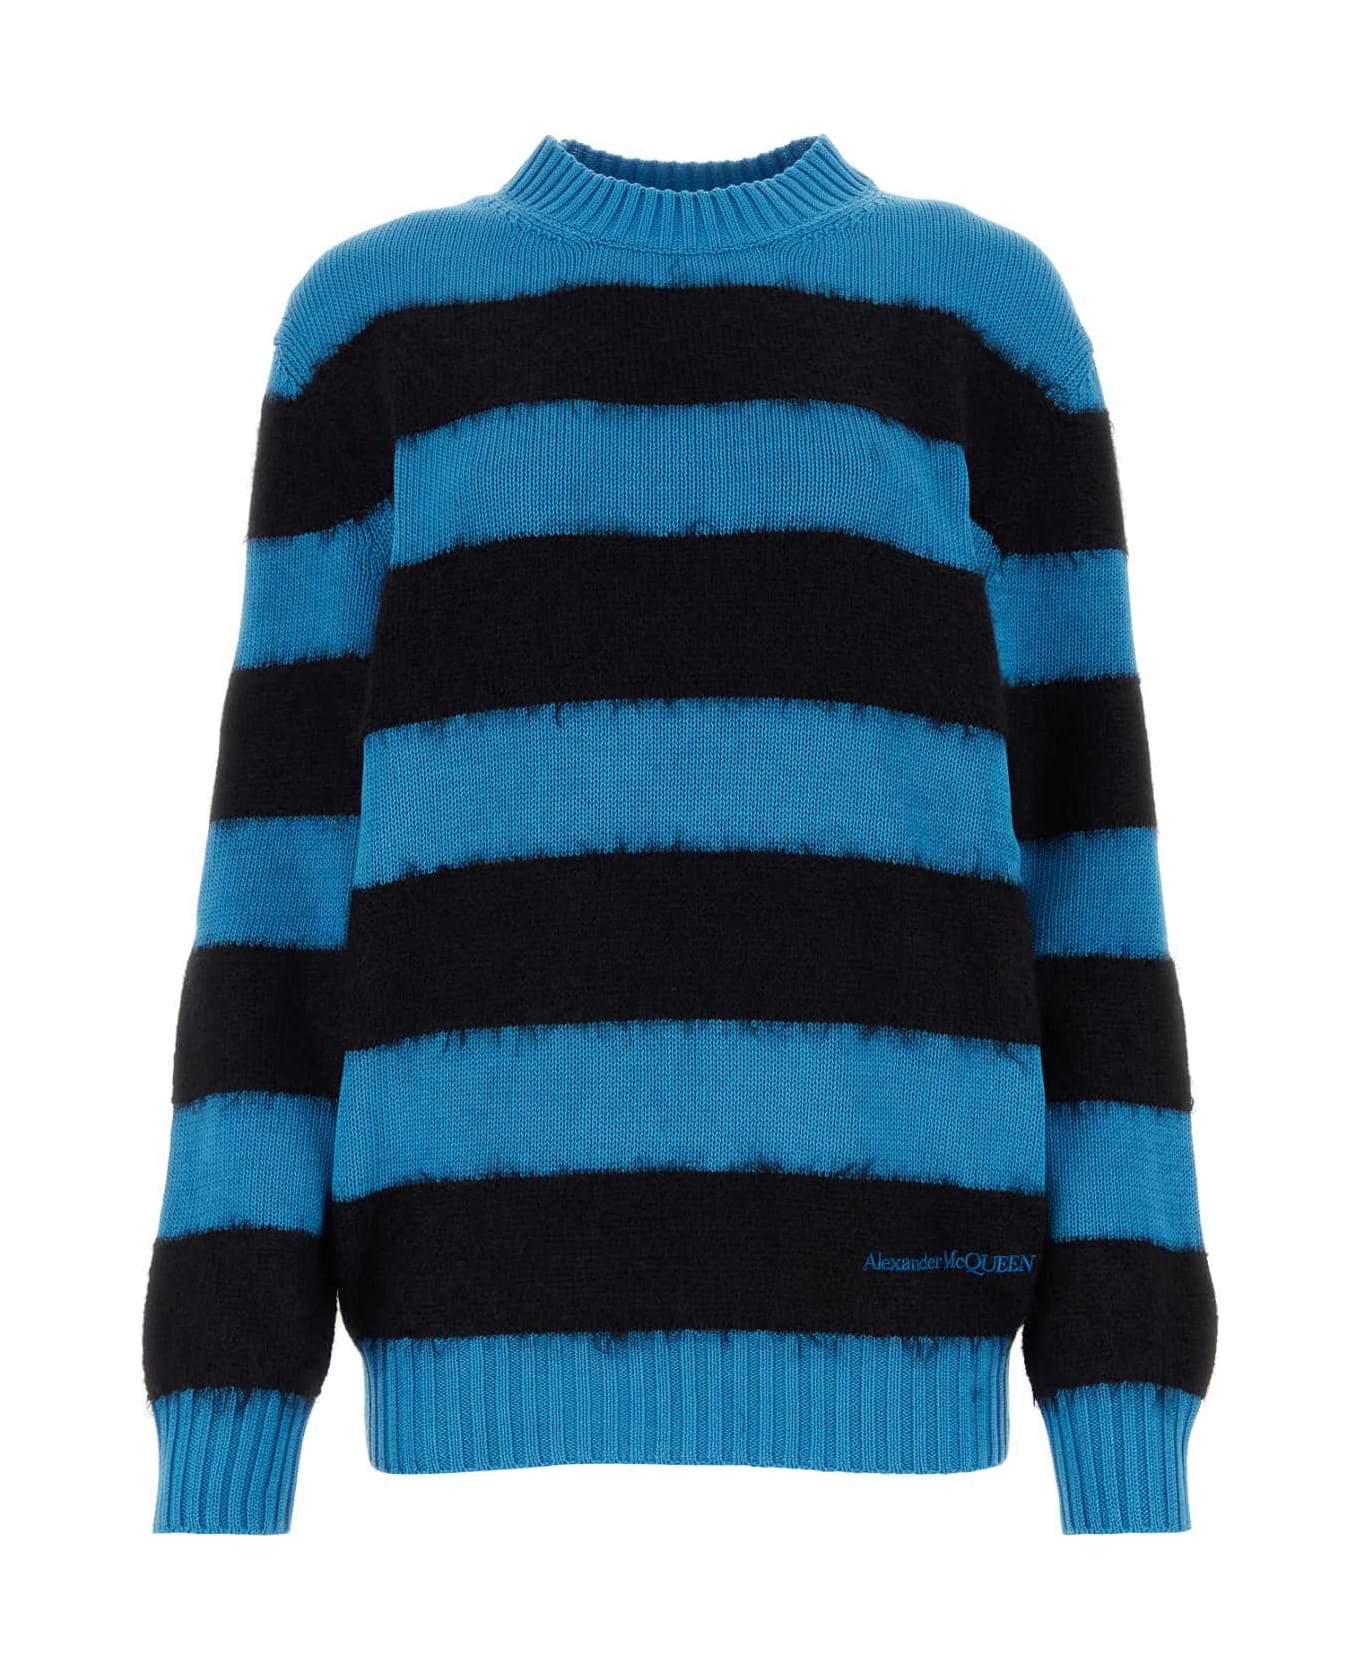 Alexander McQueen Embroidered Cotton Blend Sweater - LAPISBLUEBLACK ニットウェア